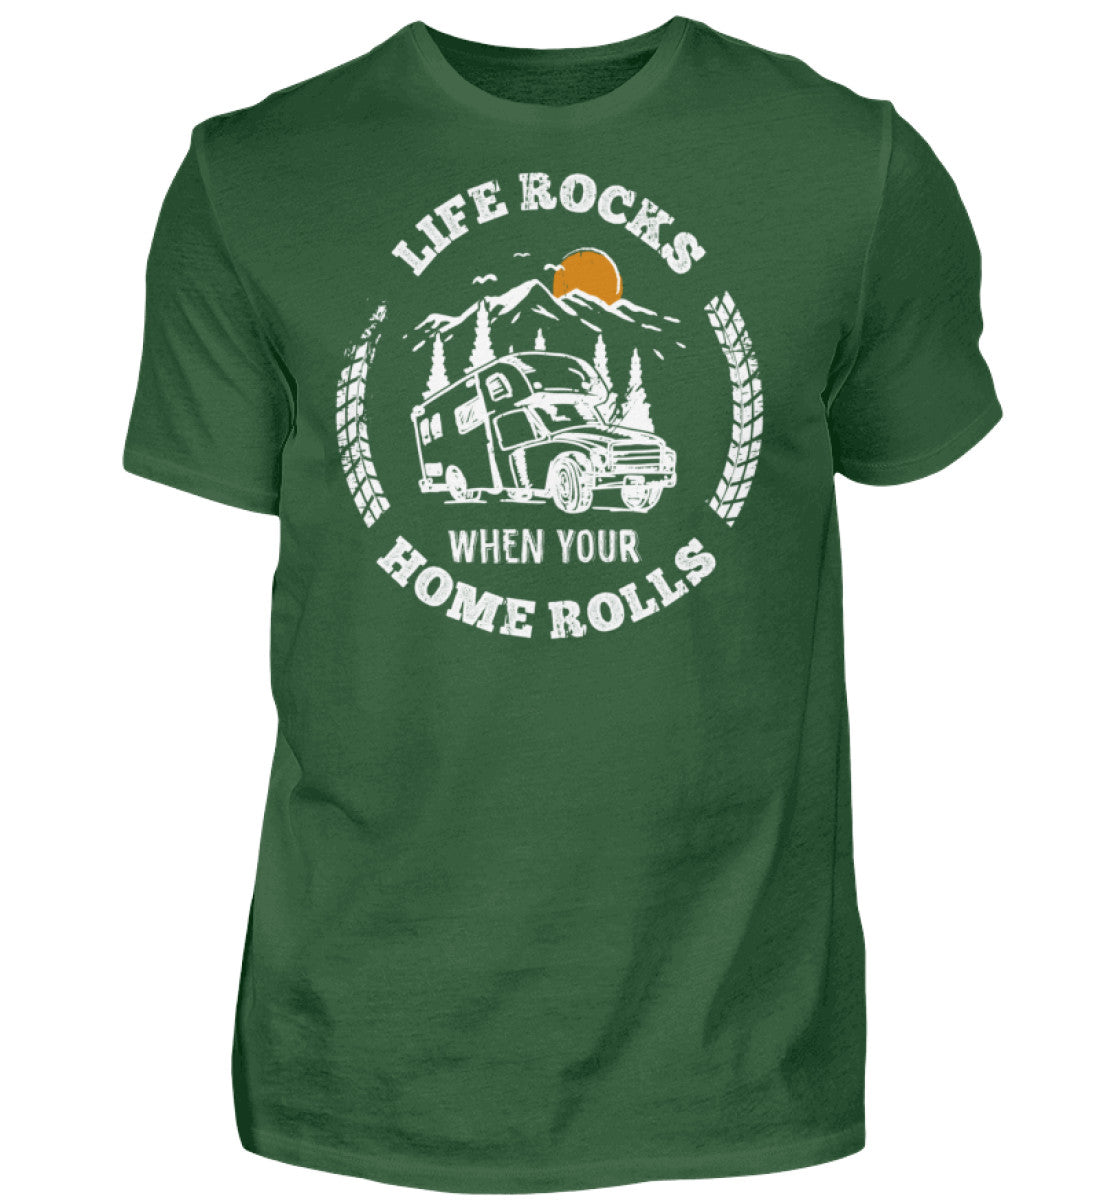 LIFE ROCKS - Herren Shirt in der Farbe Bottle Green